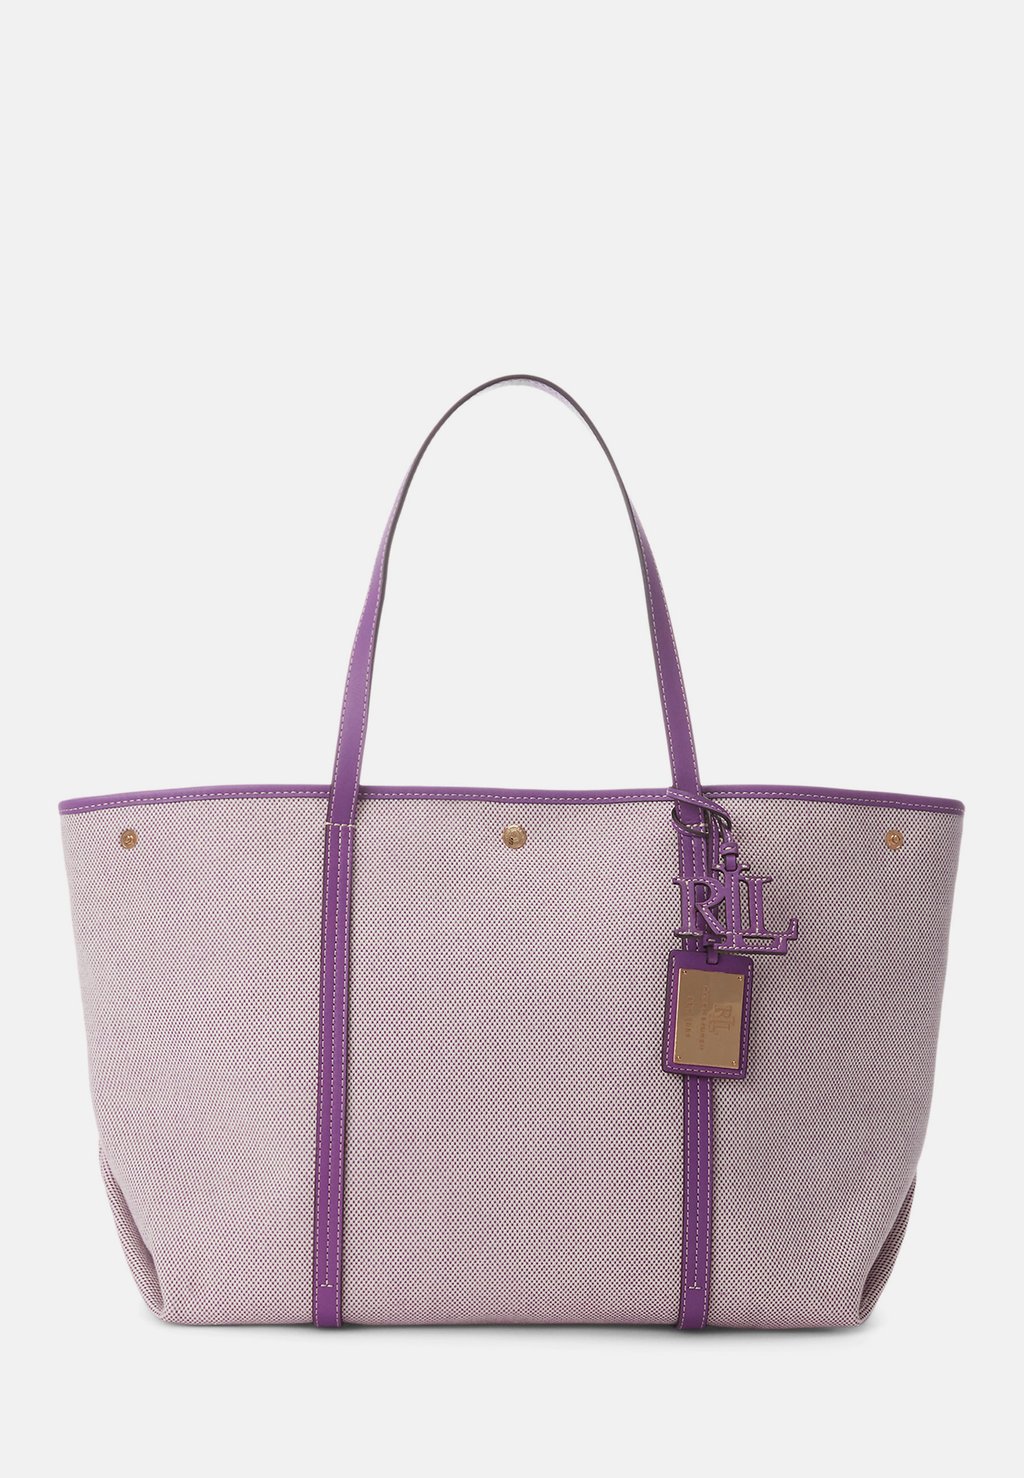 Сумка для покупок Emerie Tote Extra Large Lauren Ralph Lauren, цвет natural/purple